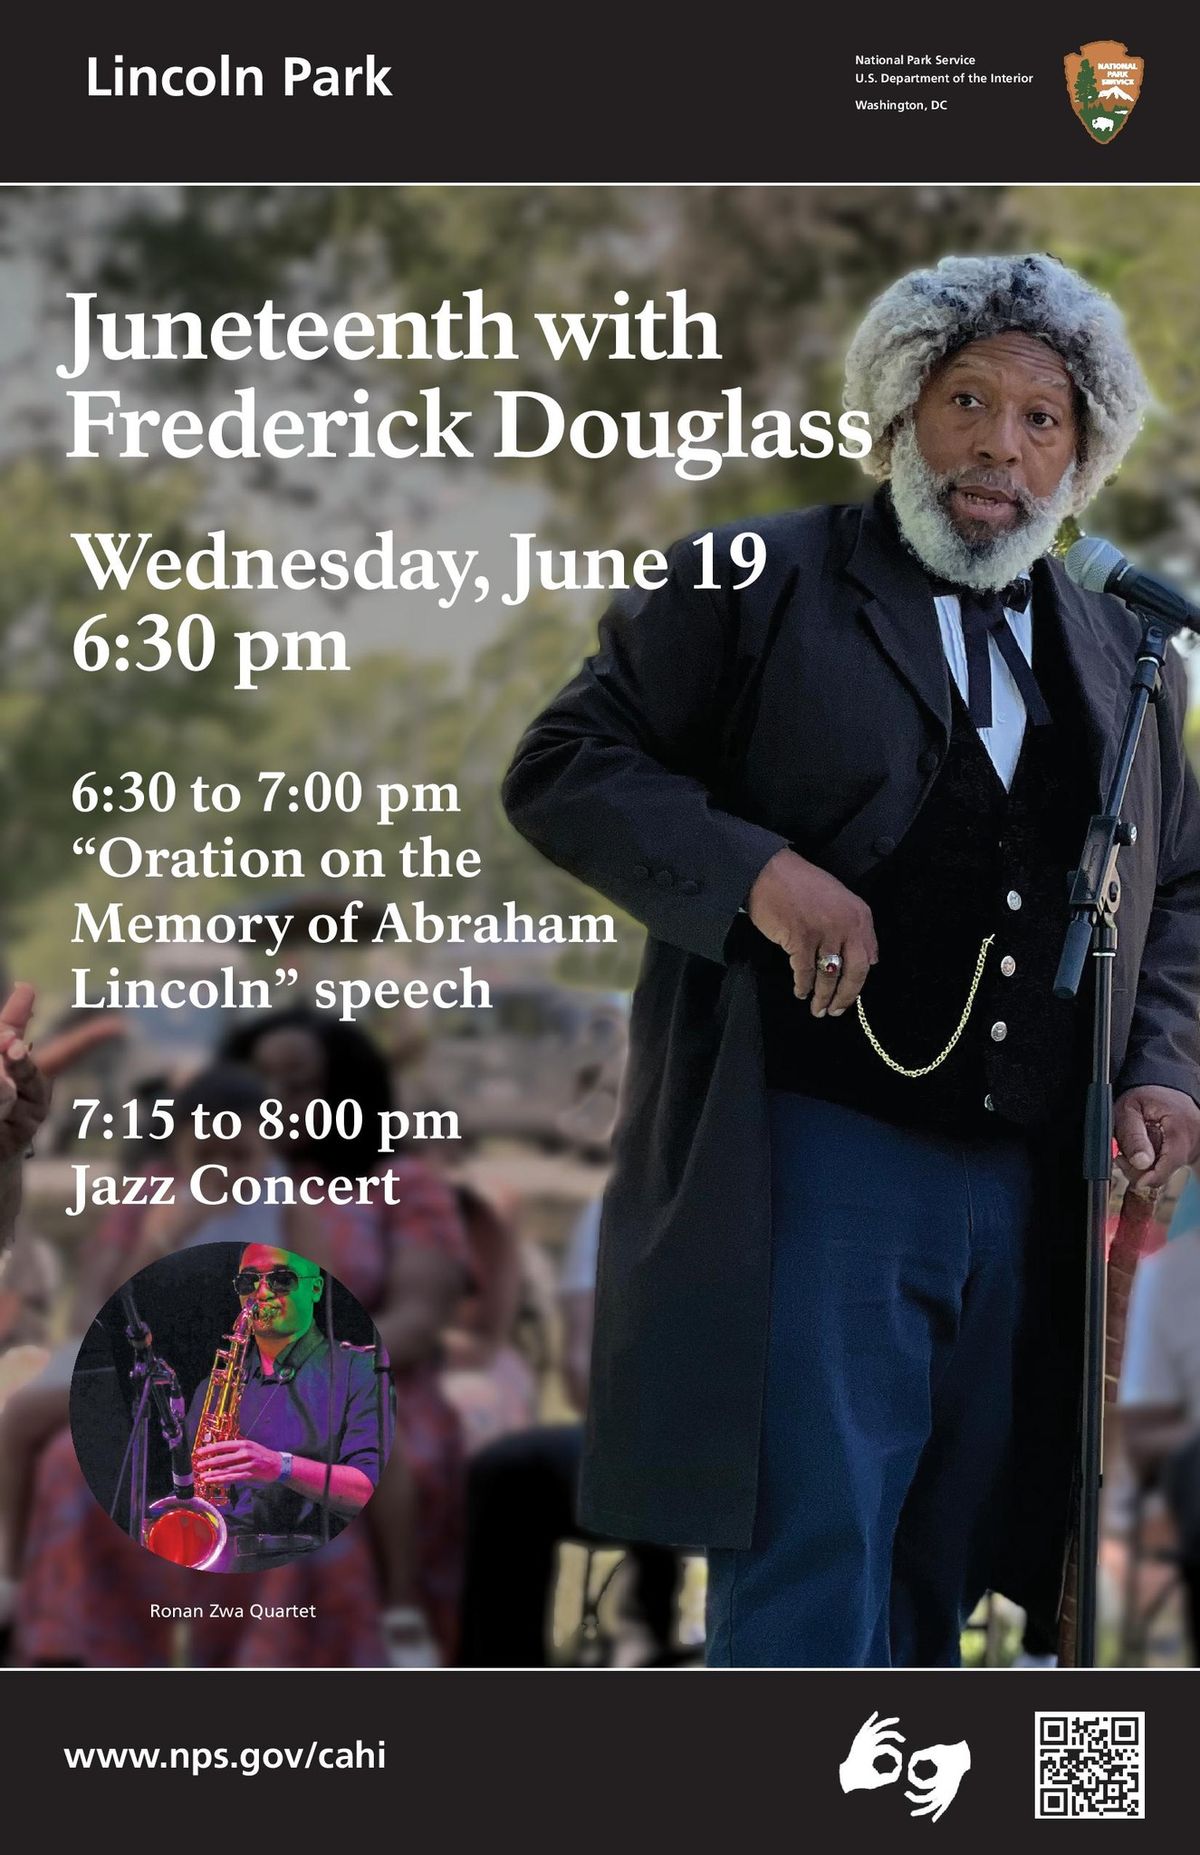 Celebrate Juneteenth with Frederick Douglass